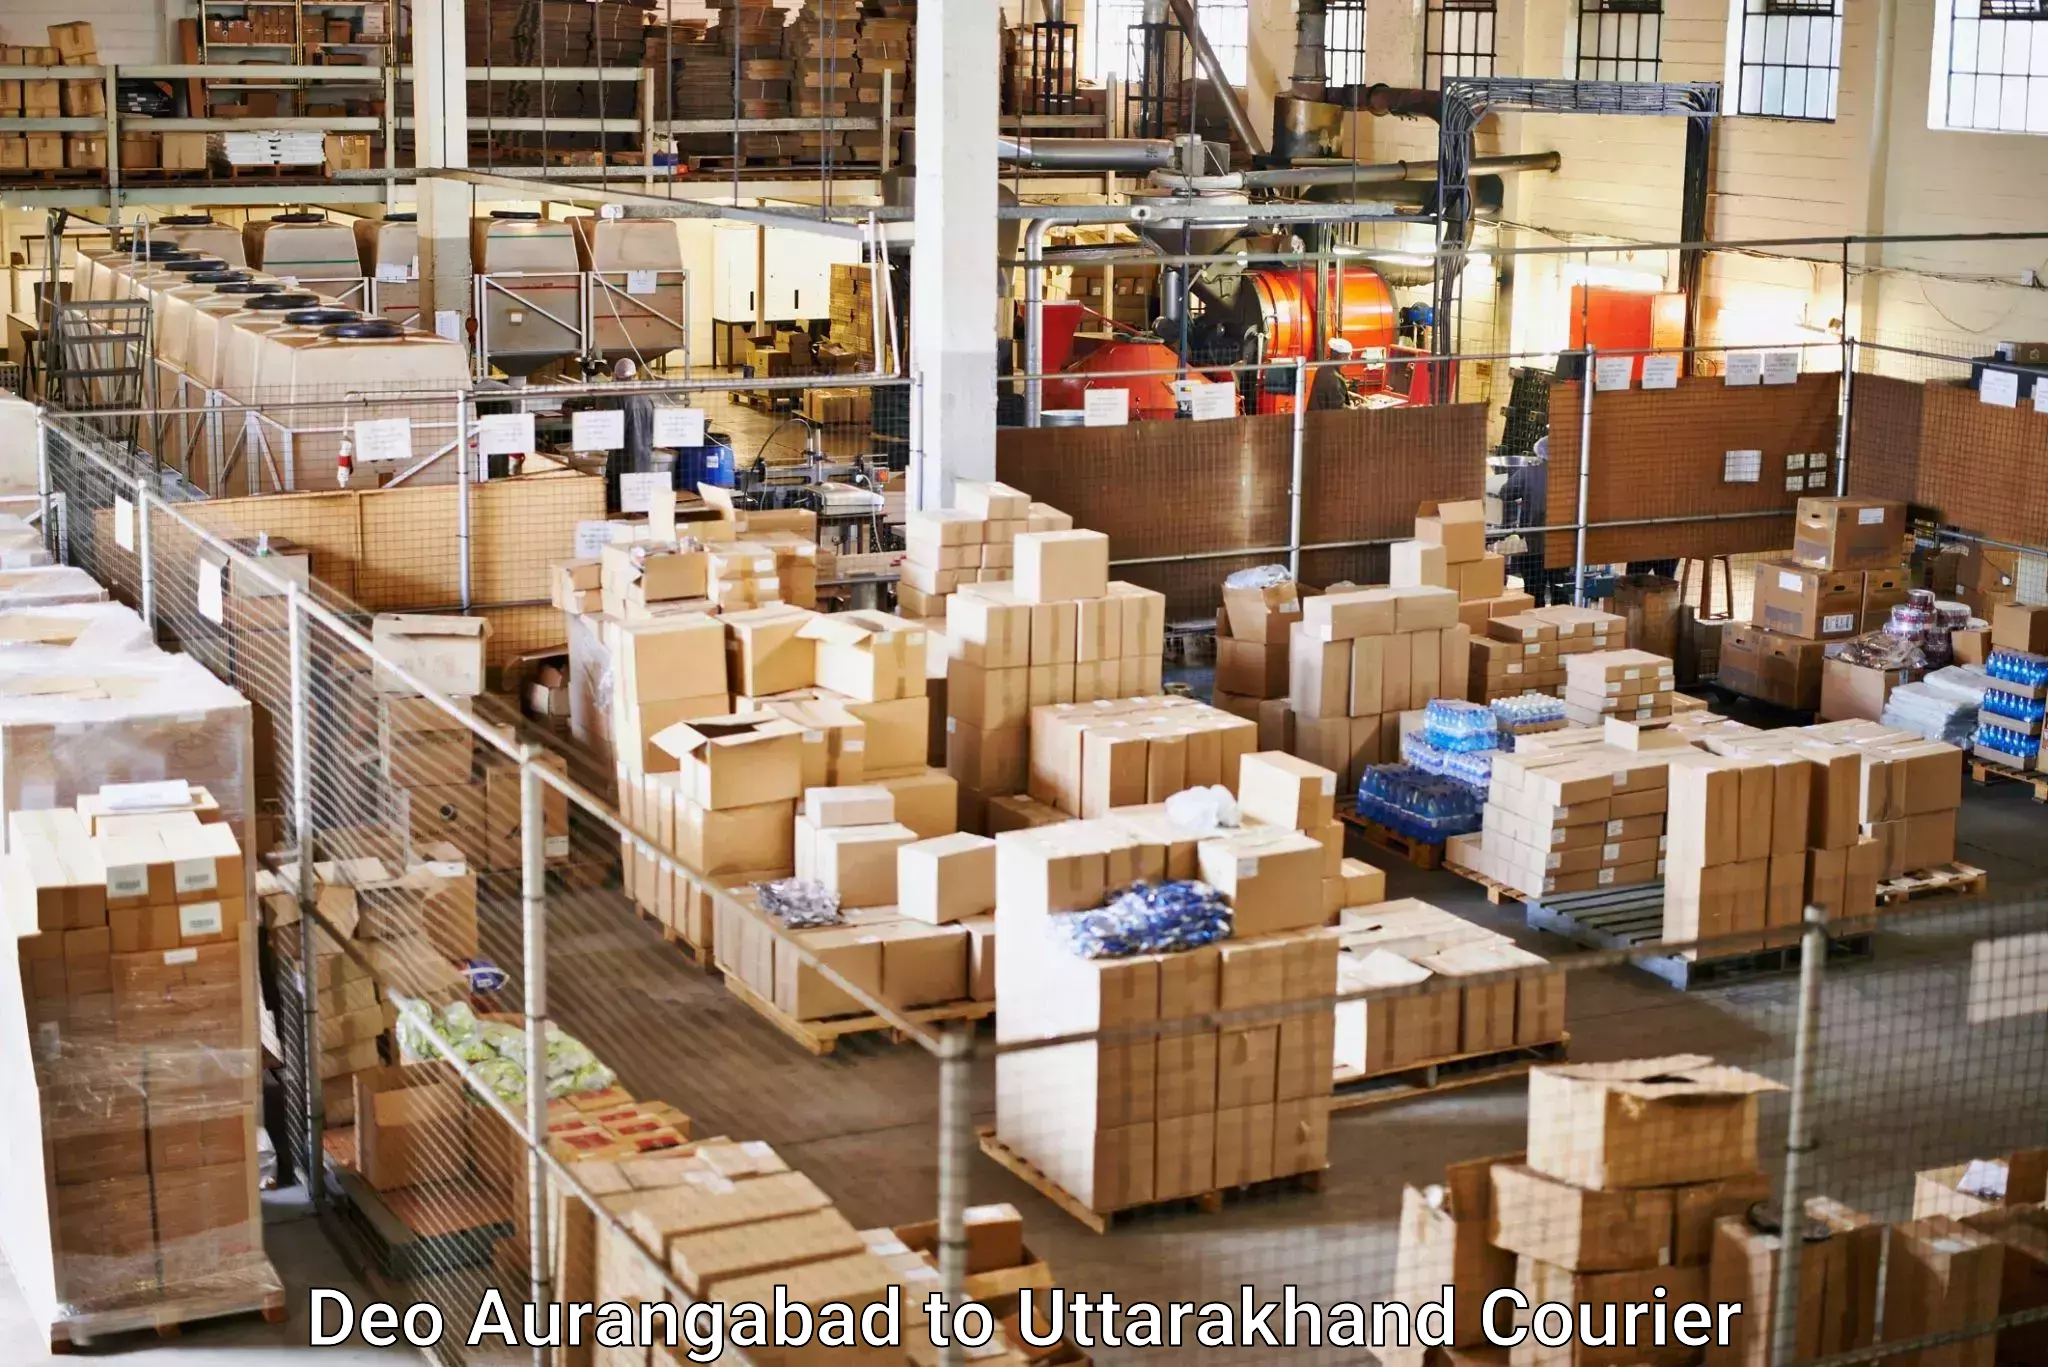 Express delivery capabilities Deo Aurangabad to Mussoorie